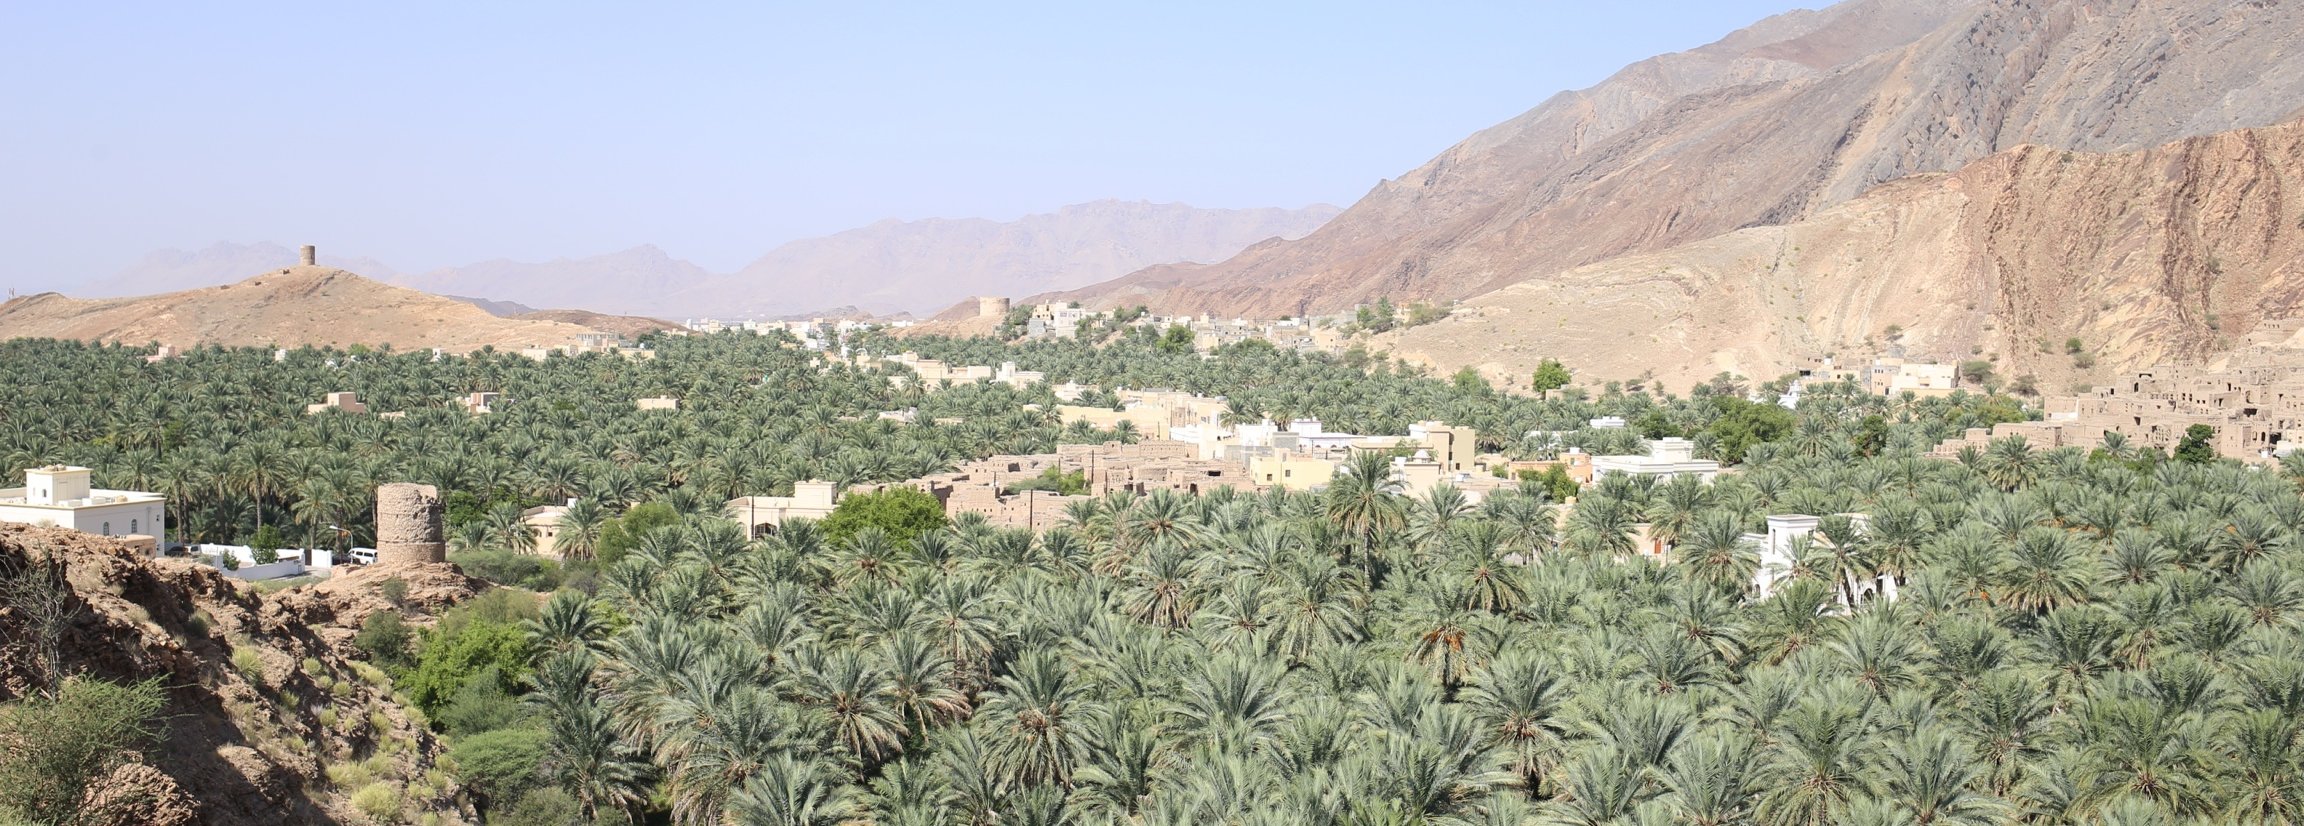 Familienreise_Oman_Trockene Berglandschaft